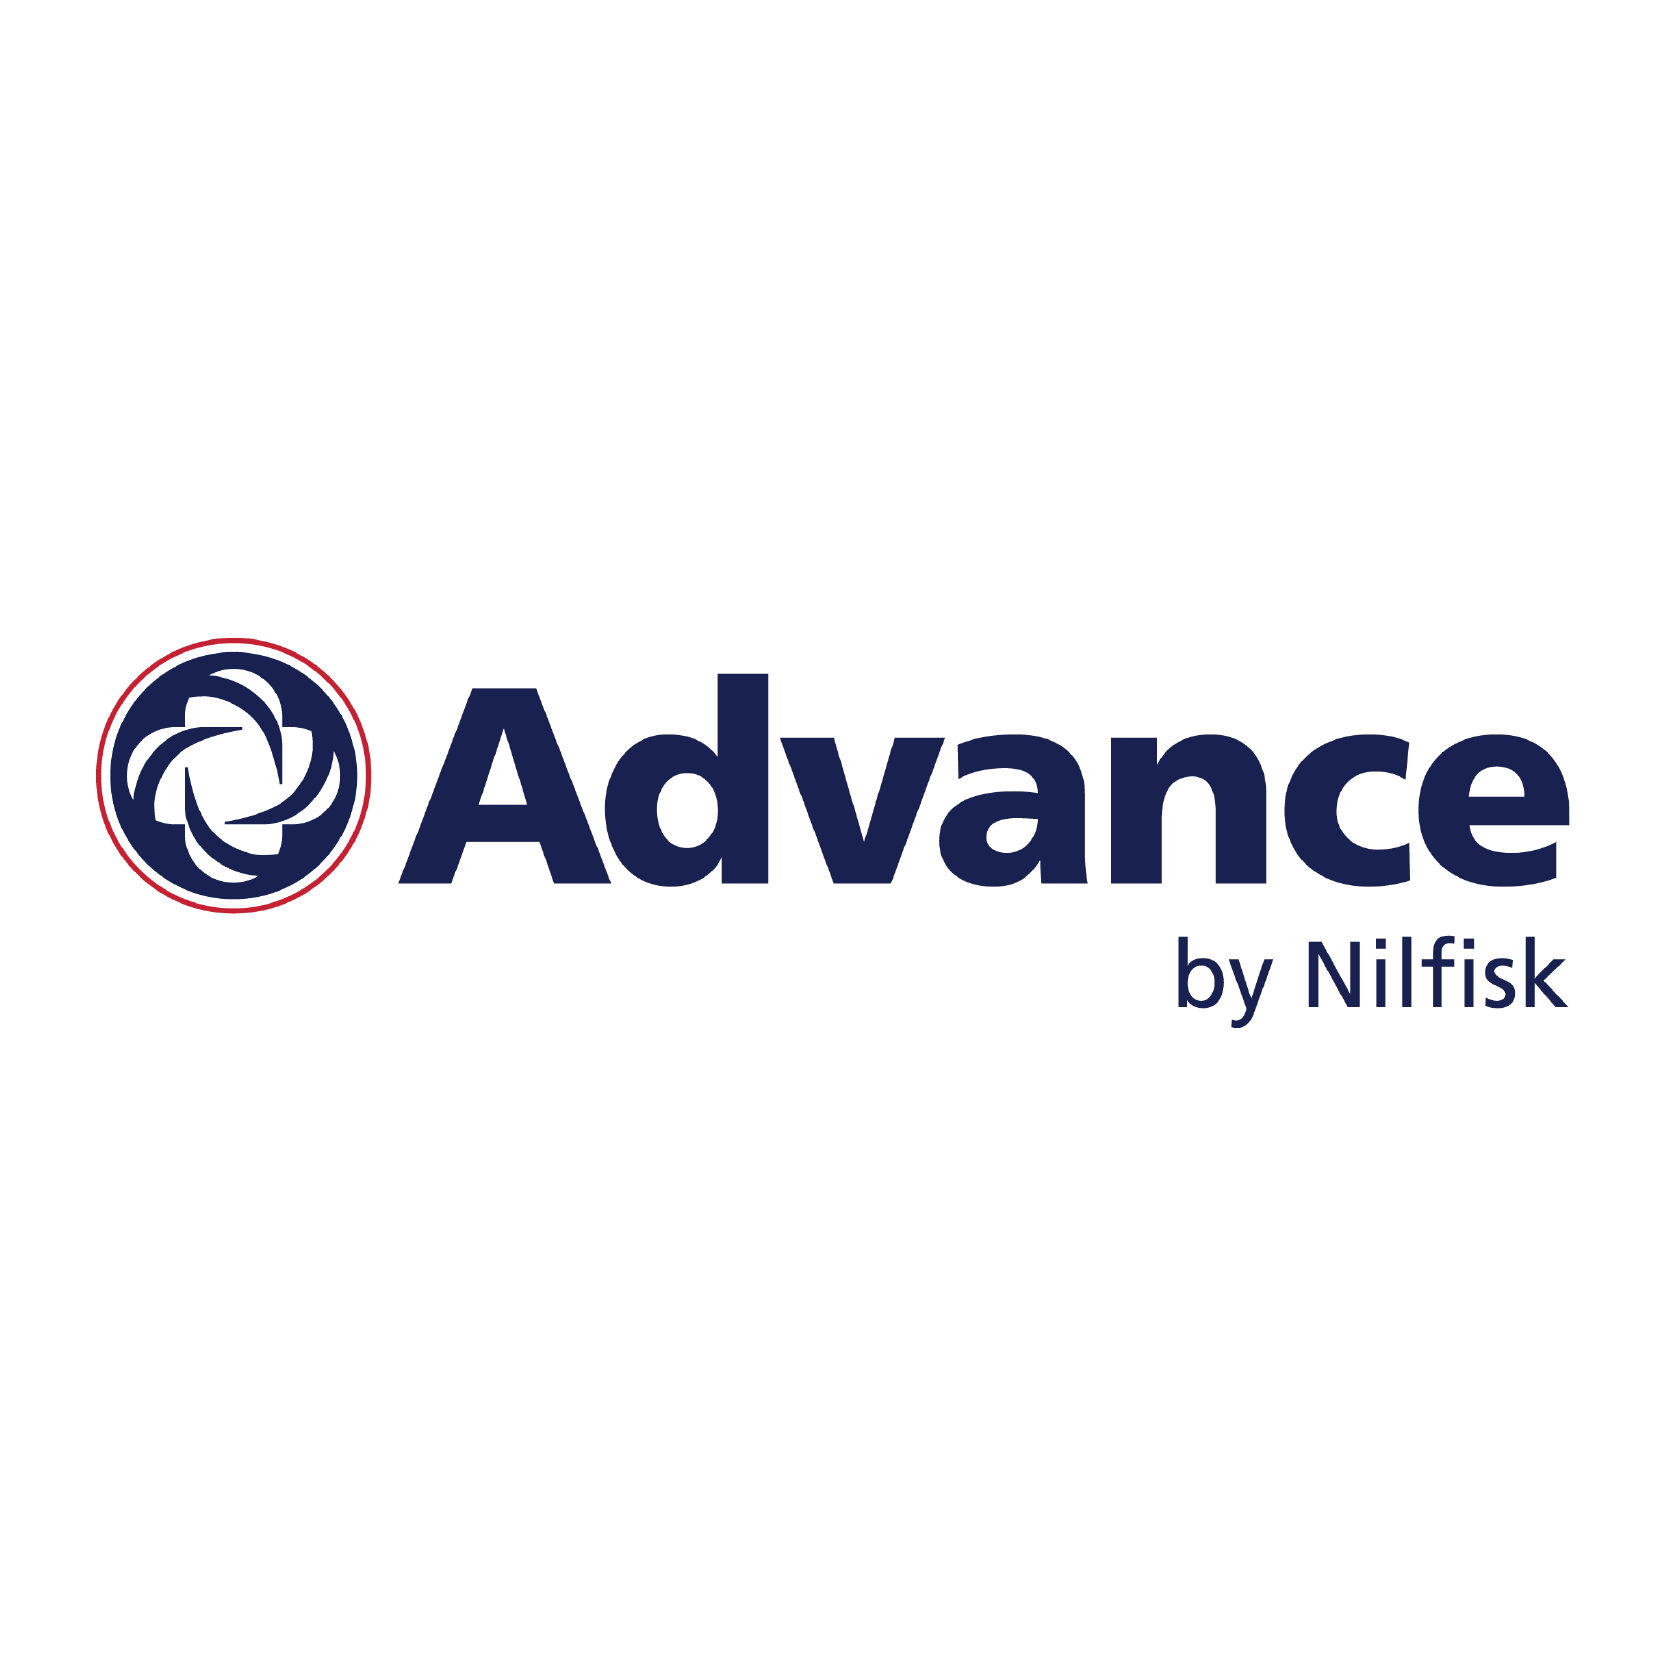 Link to Advance by Nilfisk logo